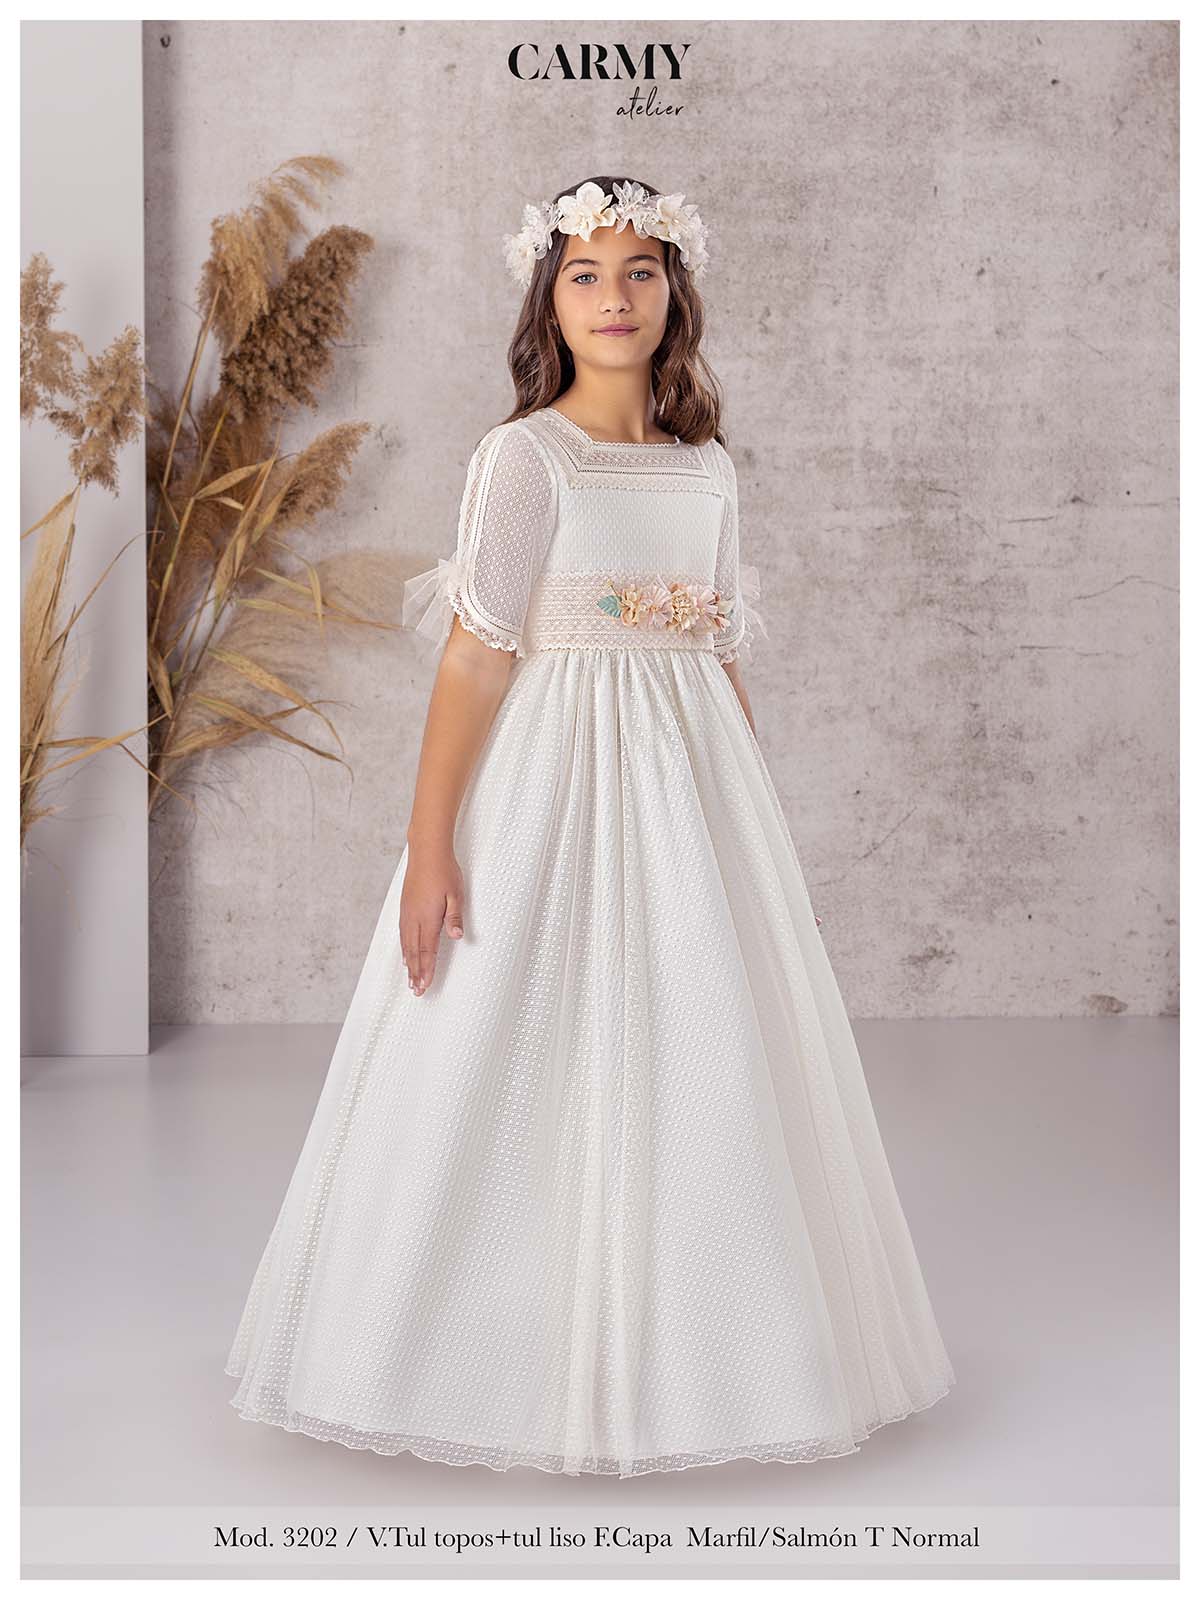 Fantasy Dress Mod. 3202 - Carmy Atelier | Vestidos de comunión ...